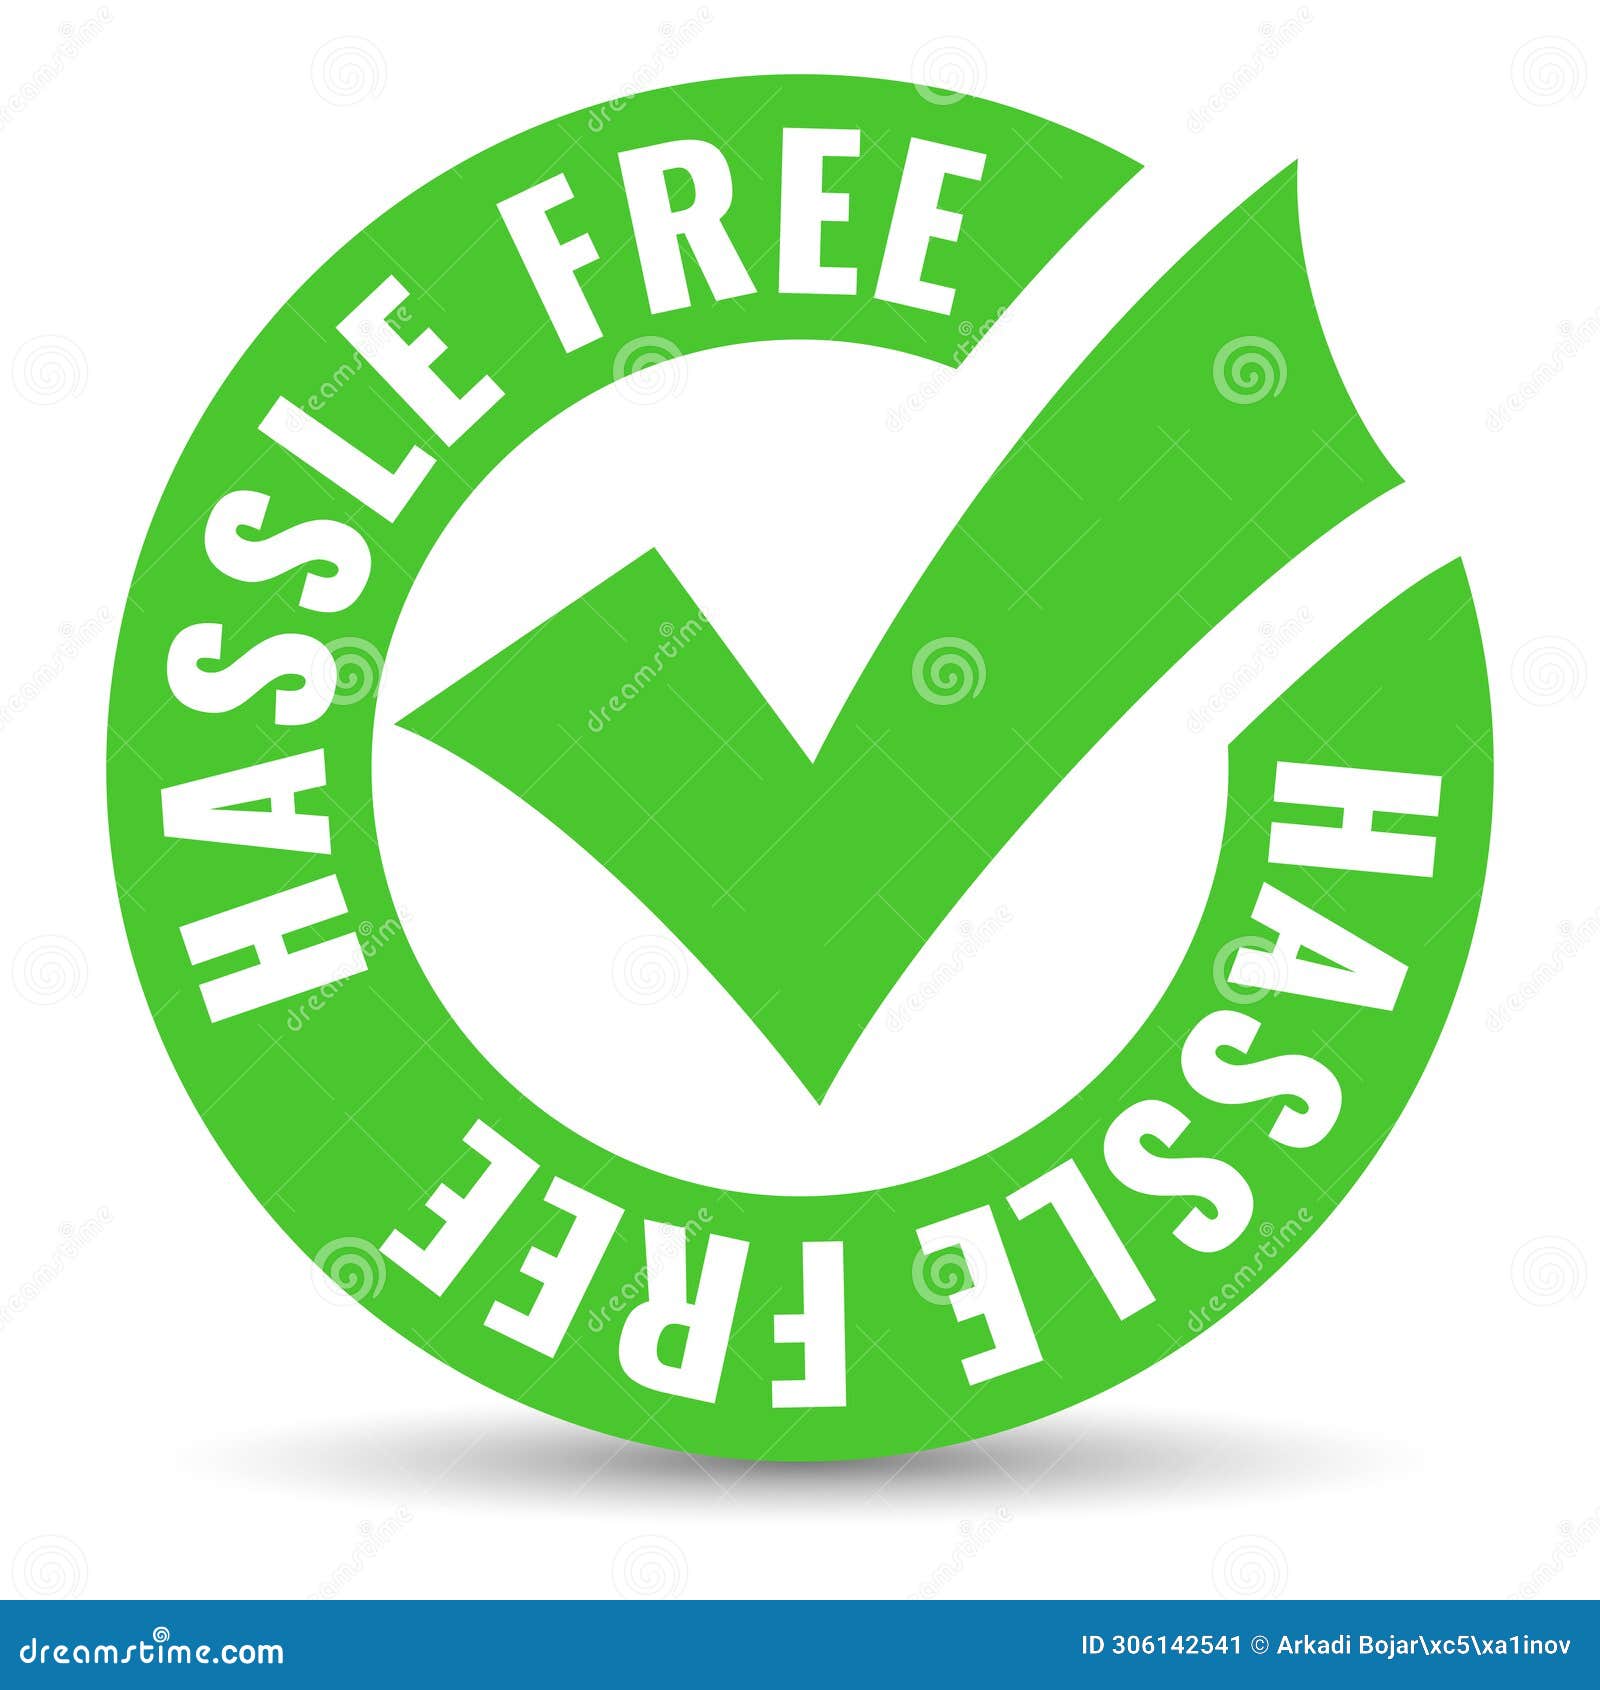 hassle free icon